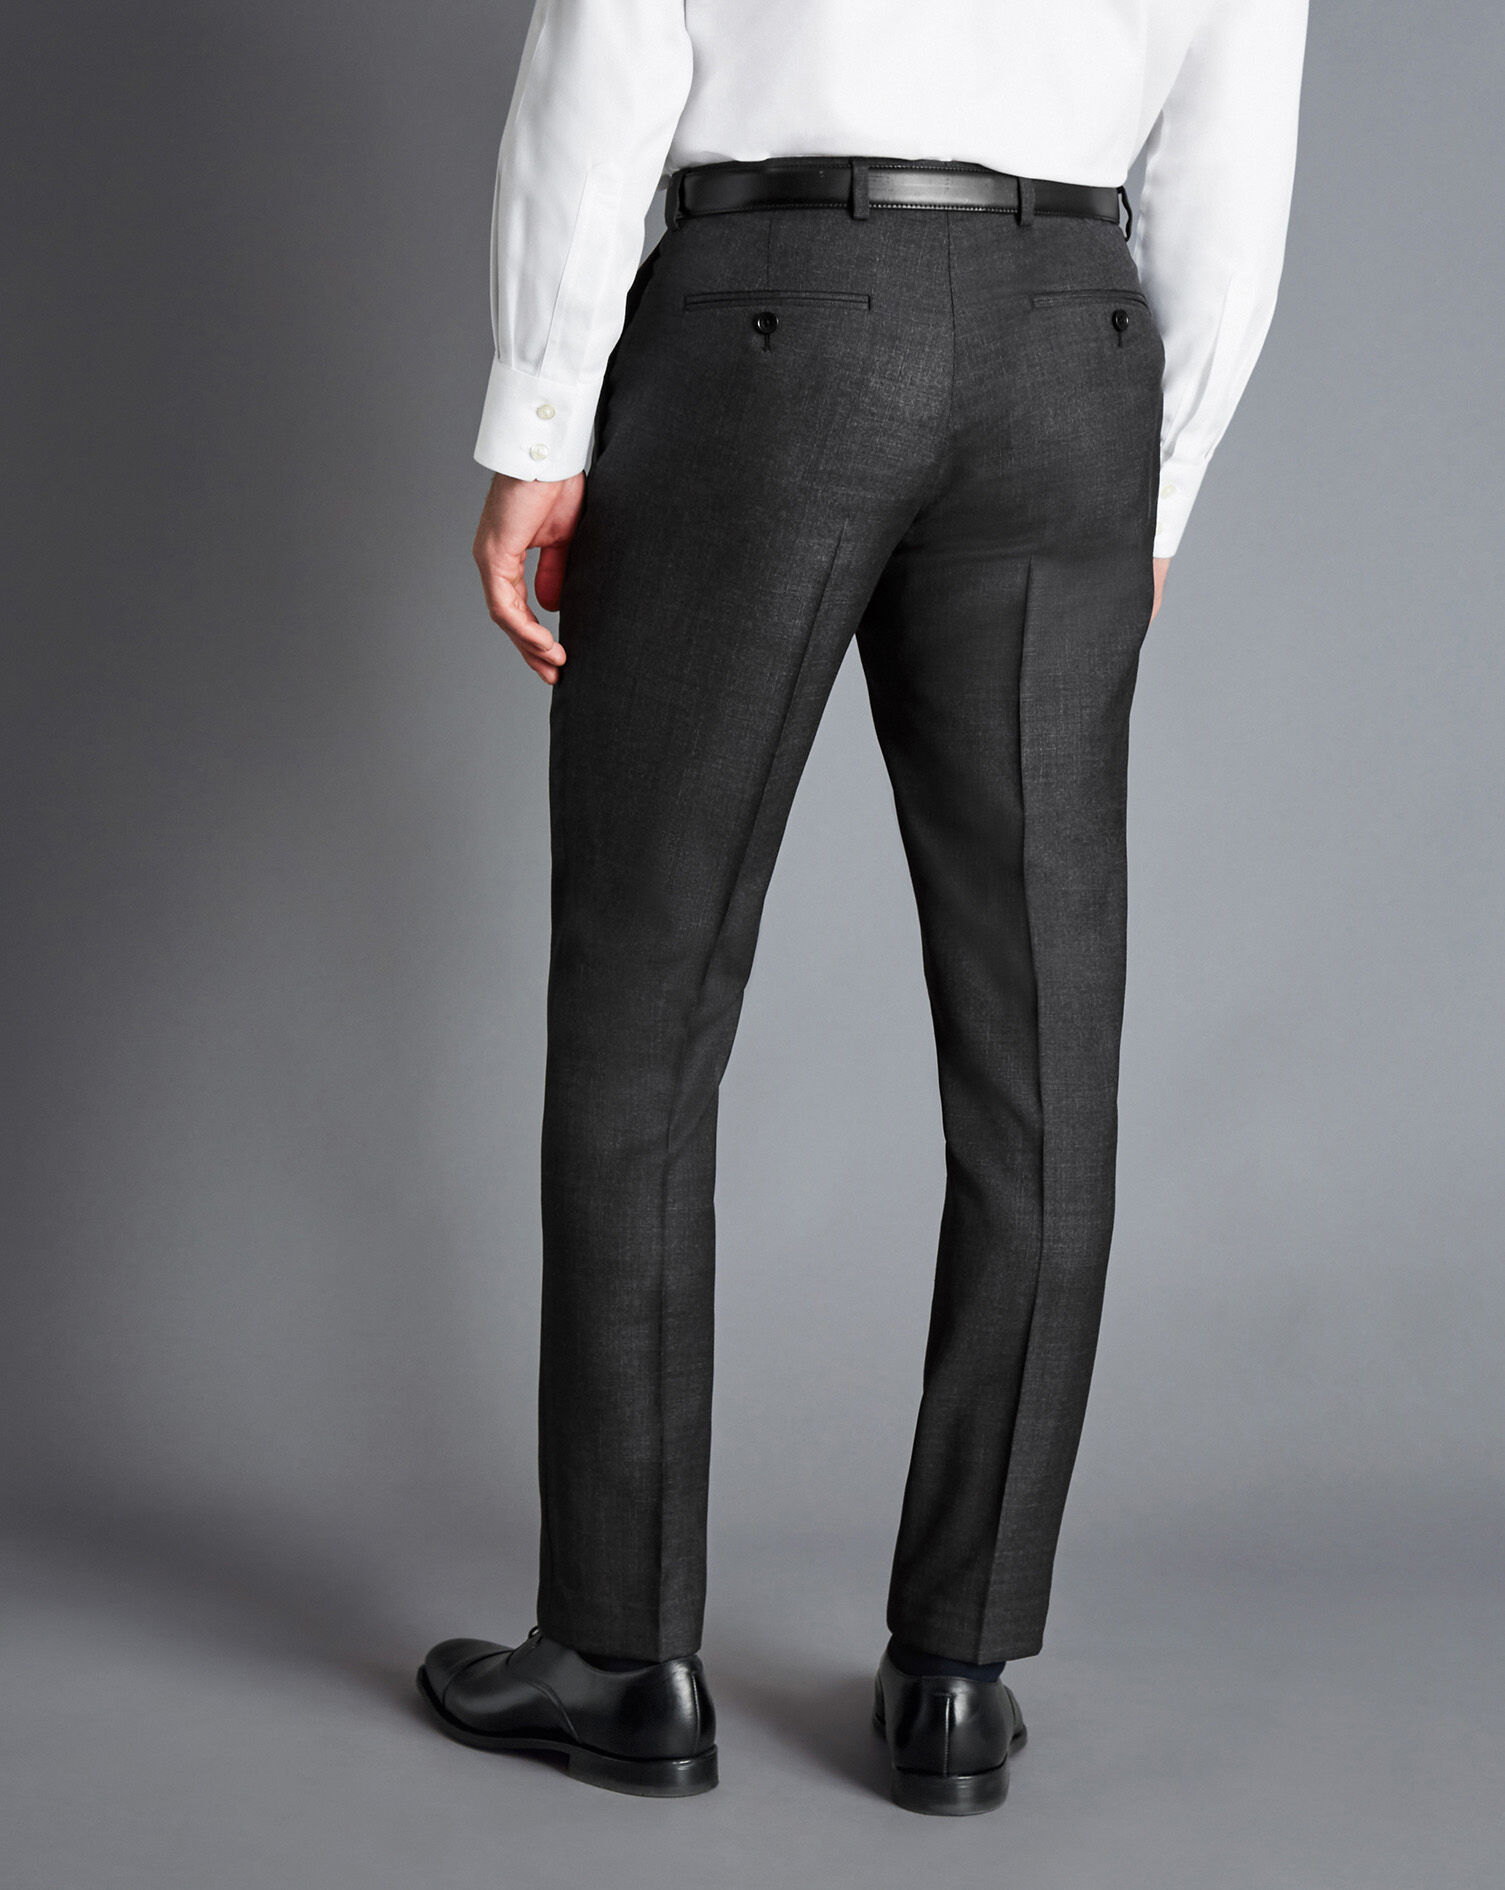 Blaq Slim Birdseye Suit Pant In Charcoal | MYER